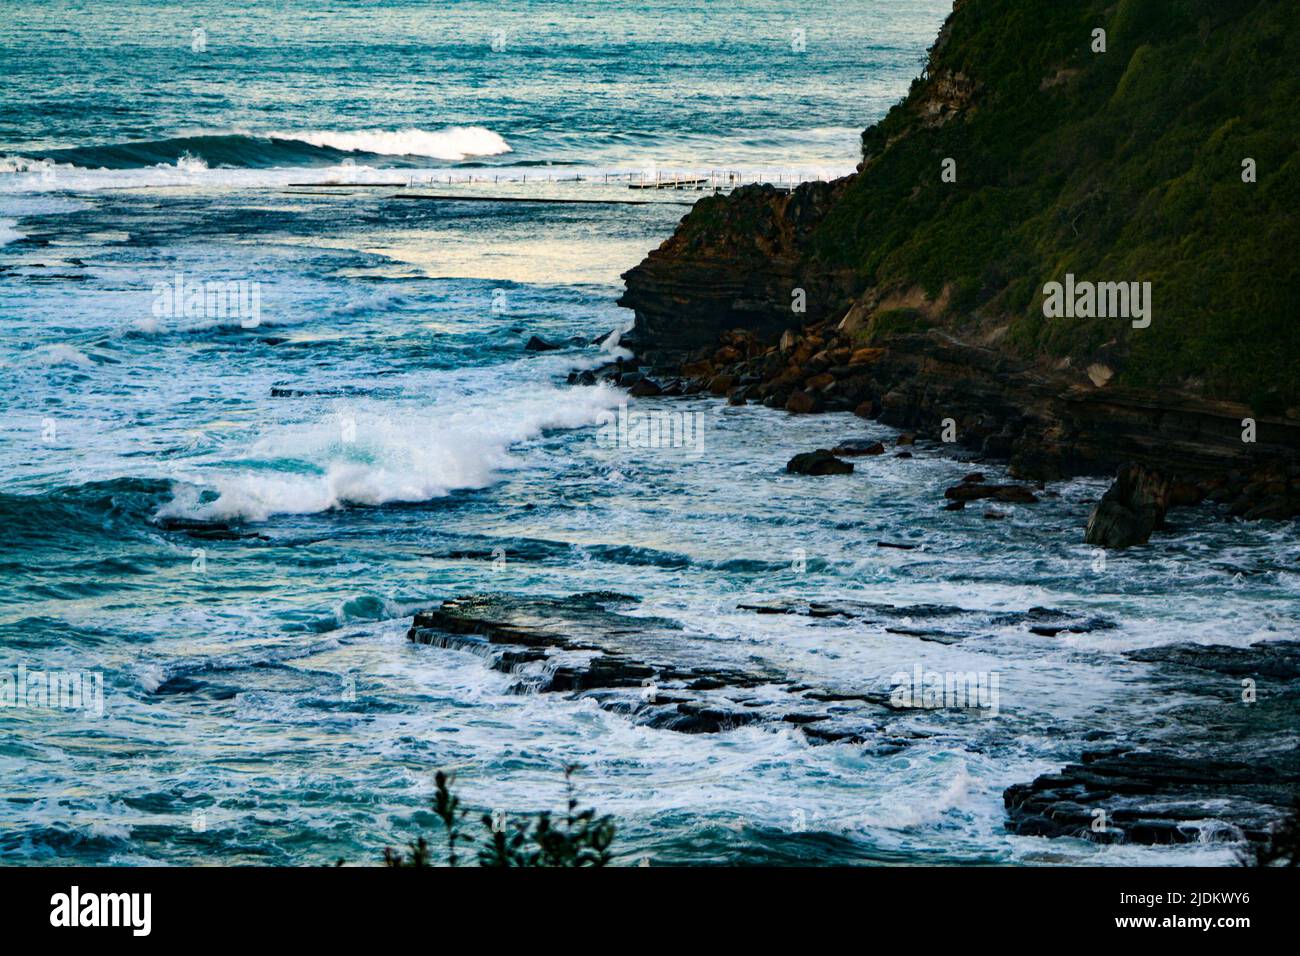 Narrabeen beach and ocean Stock Photo